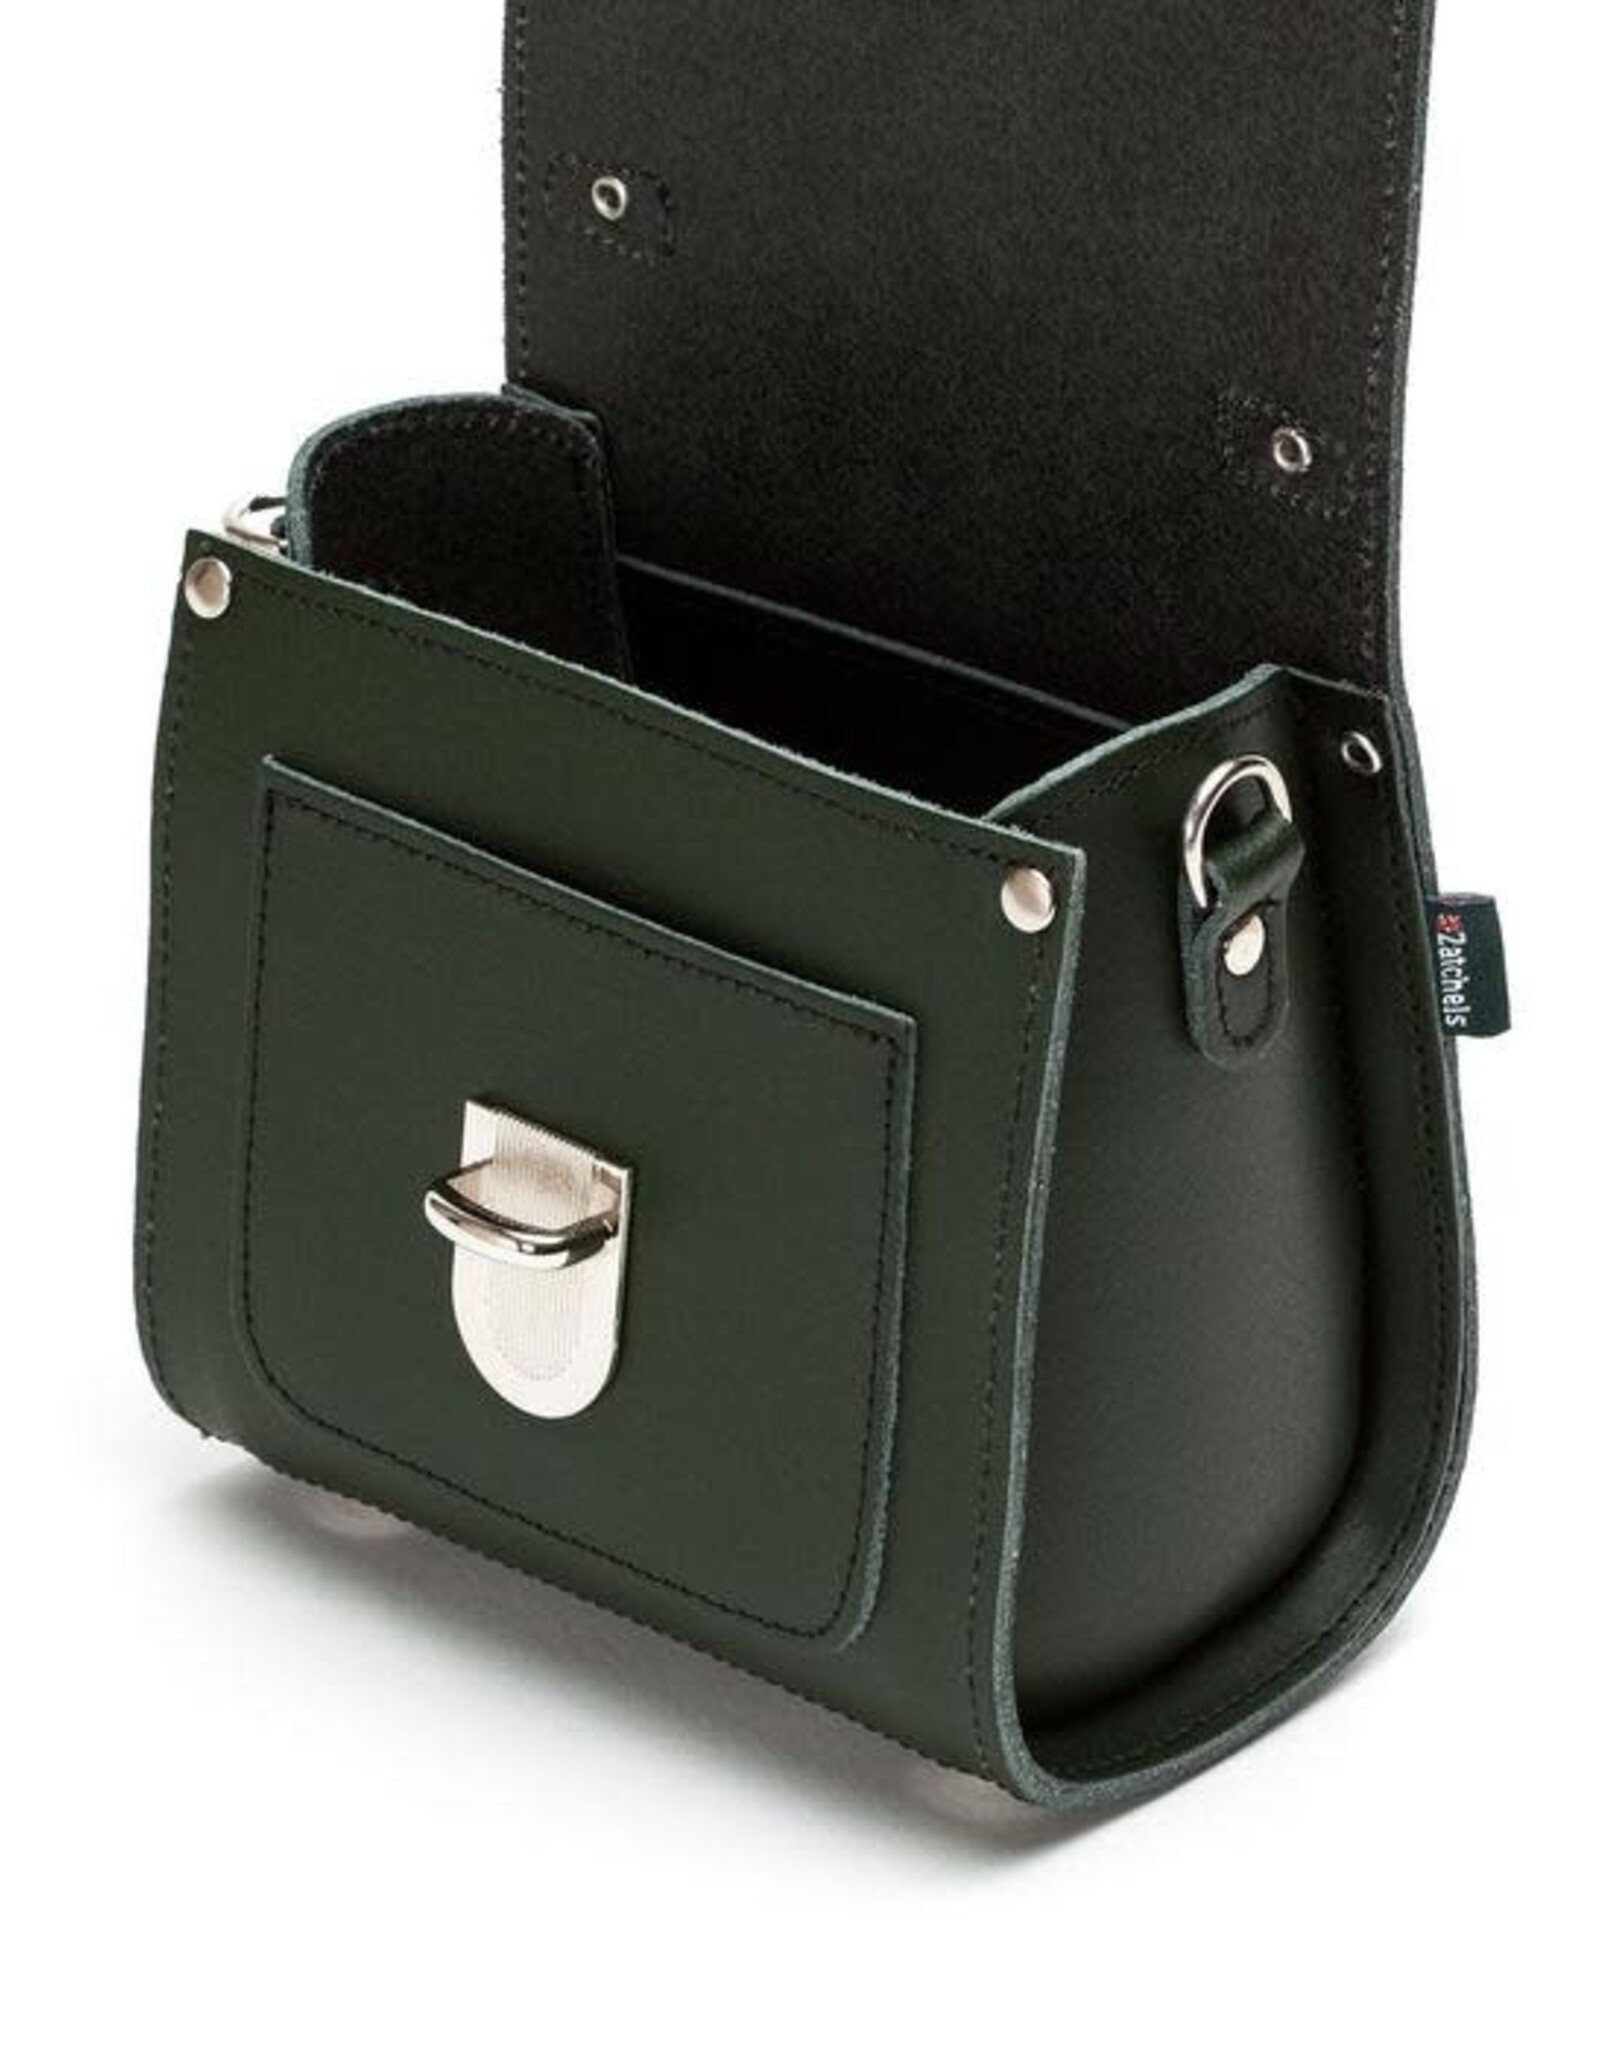 Zatchels Zatchels - Handmade Leather Sugarcube Handbag - Ivy Green - Small